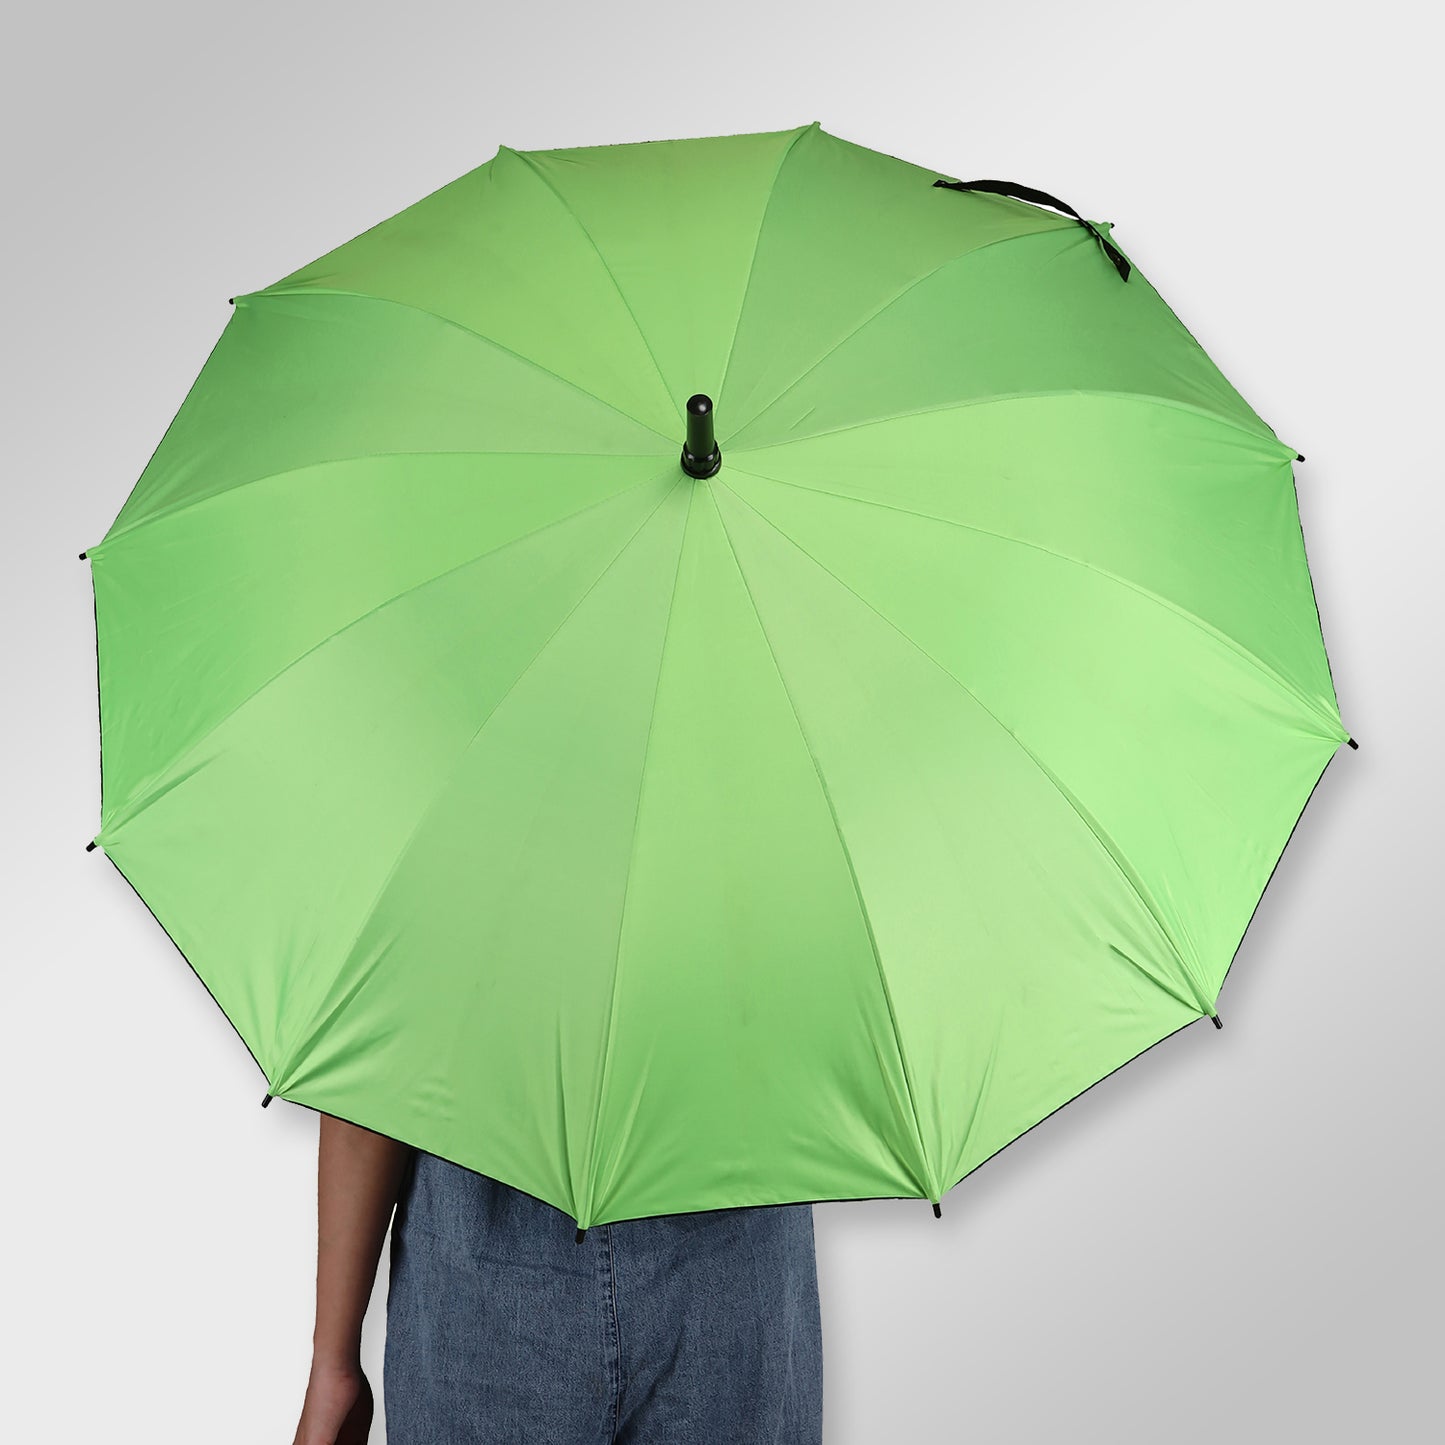 SUPERSTAR | Automatic Open Fashion Umbrella - Green